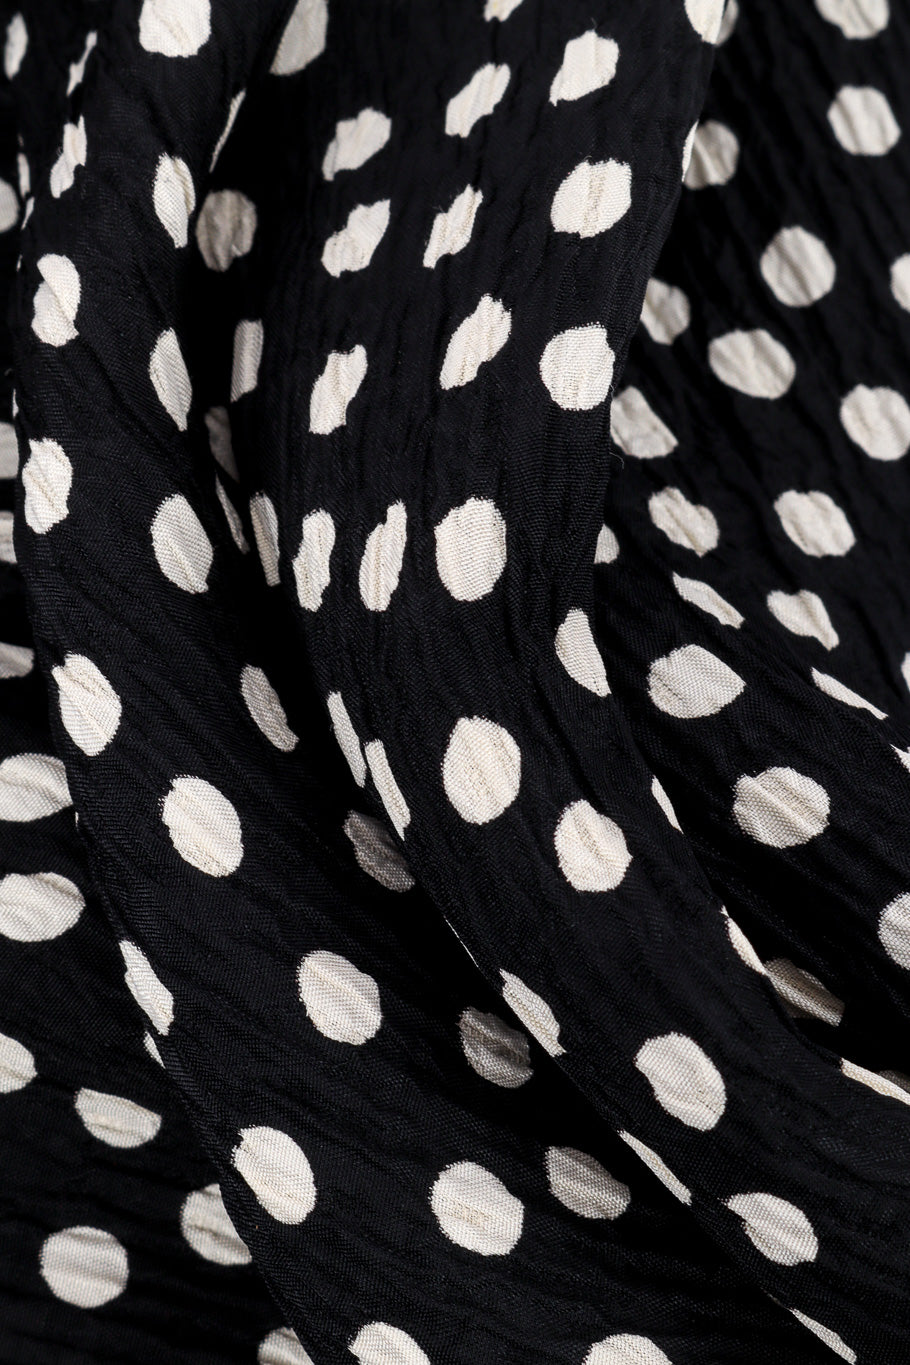 Vintage Sonia Rykiel Polka Dot Jacket and Skirt Set fabric closeup @recessla